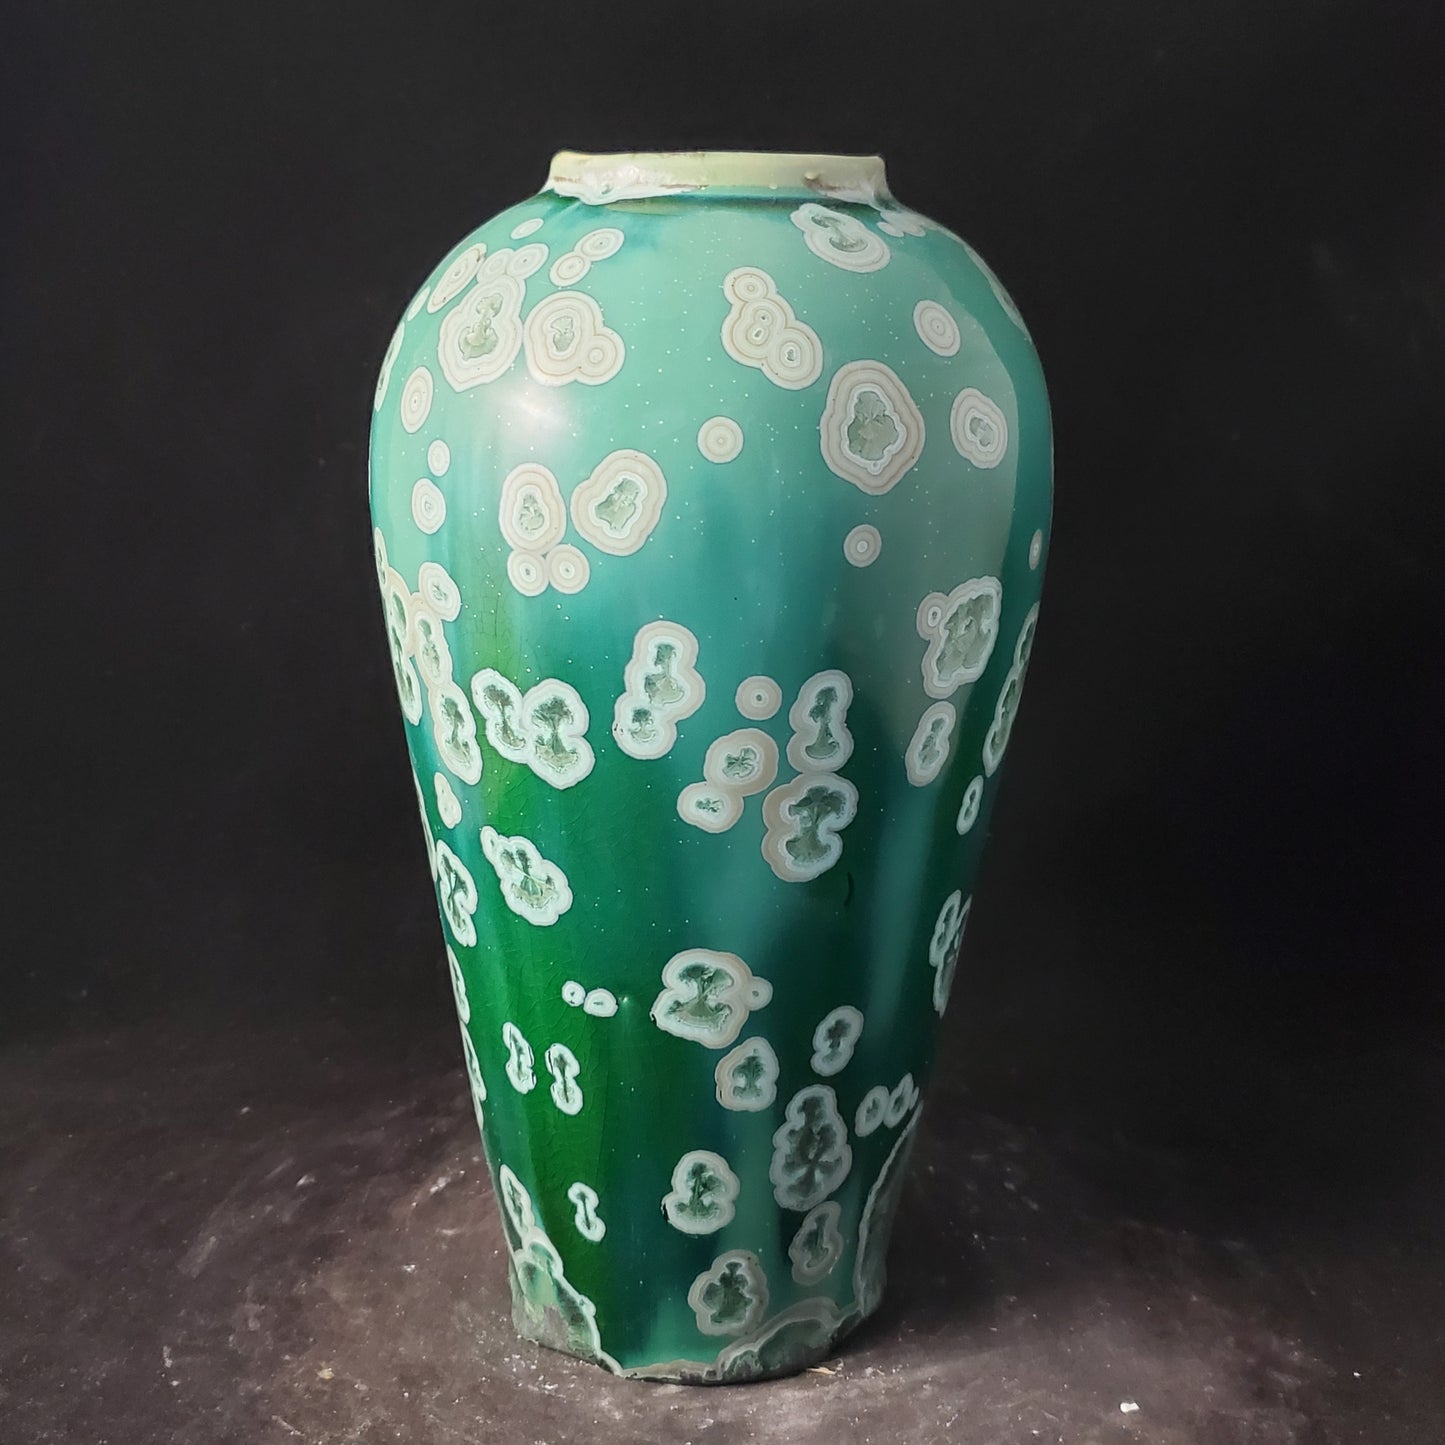 Crystalline Vase - 9"t x 5"w